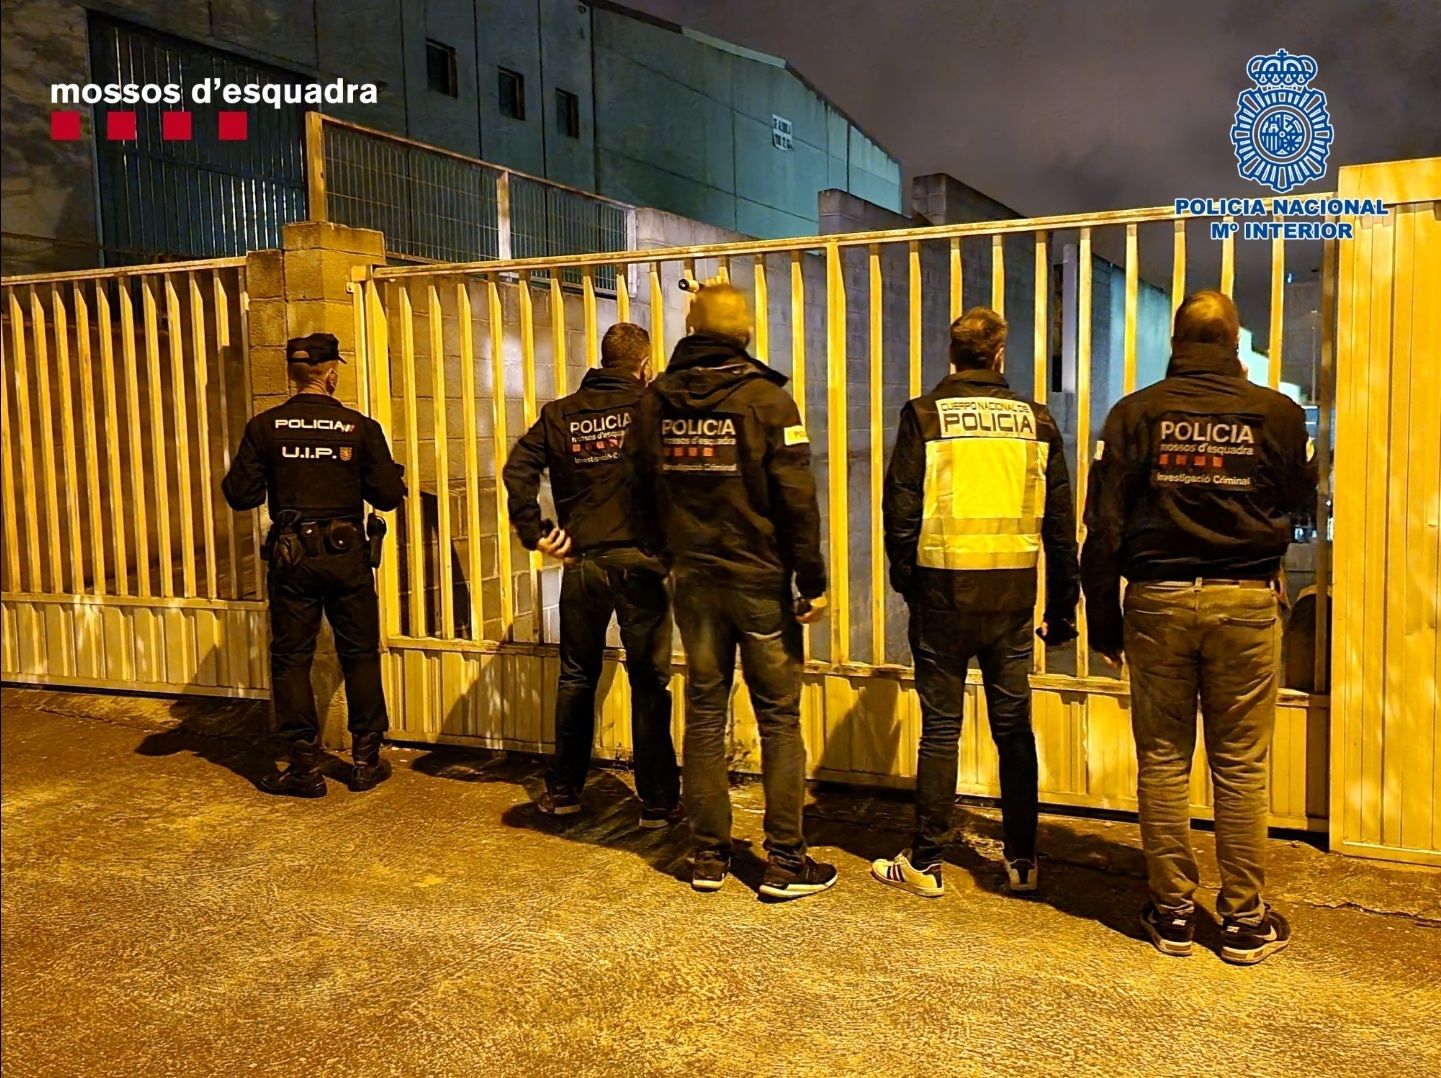 Mafia china droga Barcelona / Mossos d'Esquadra y Policía Nacional